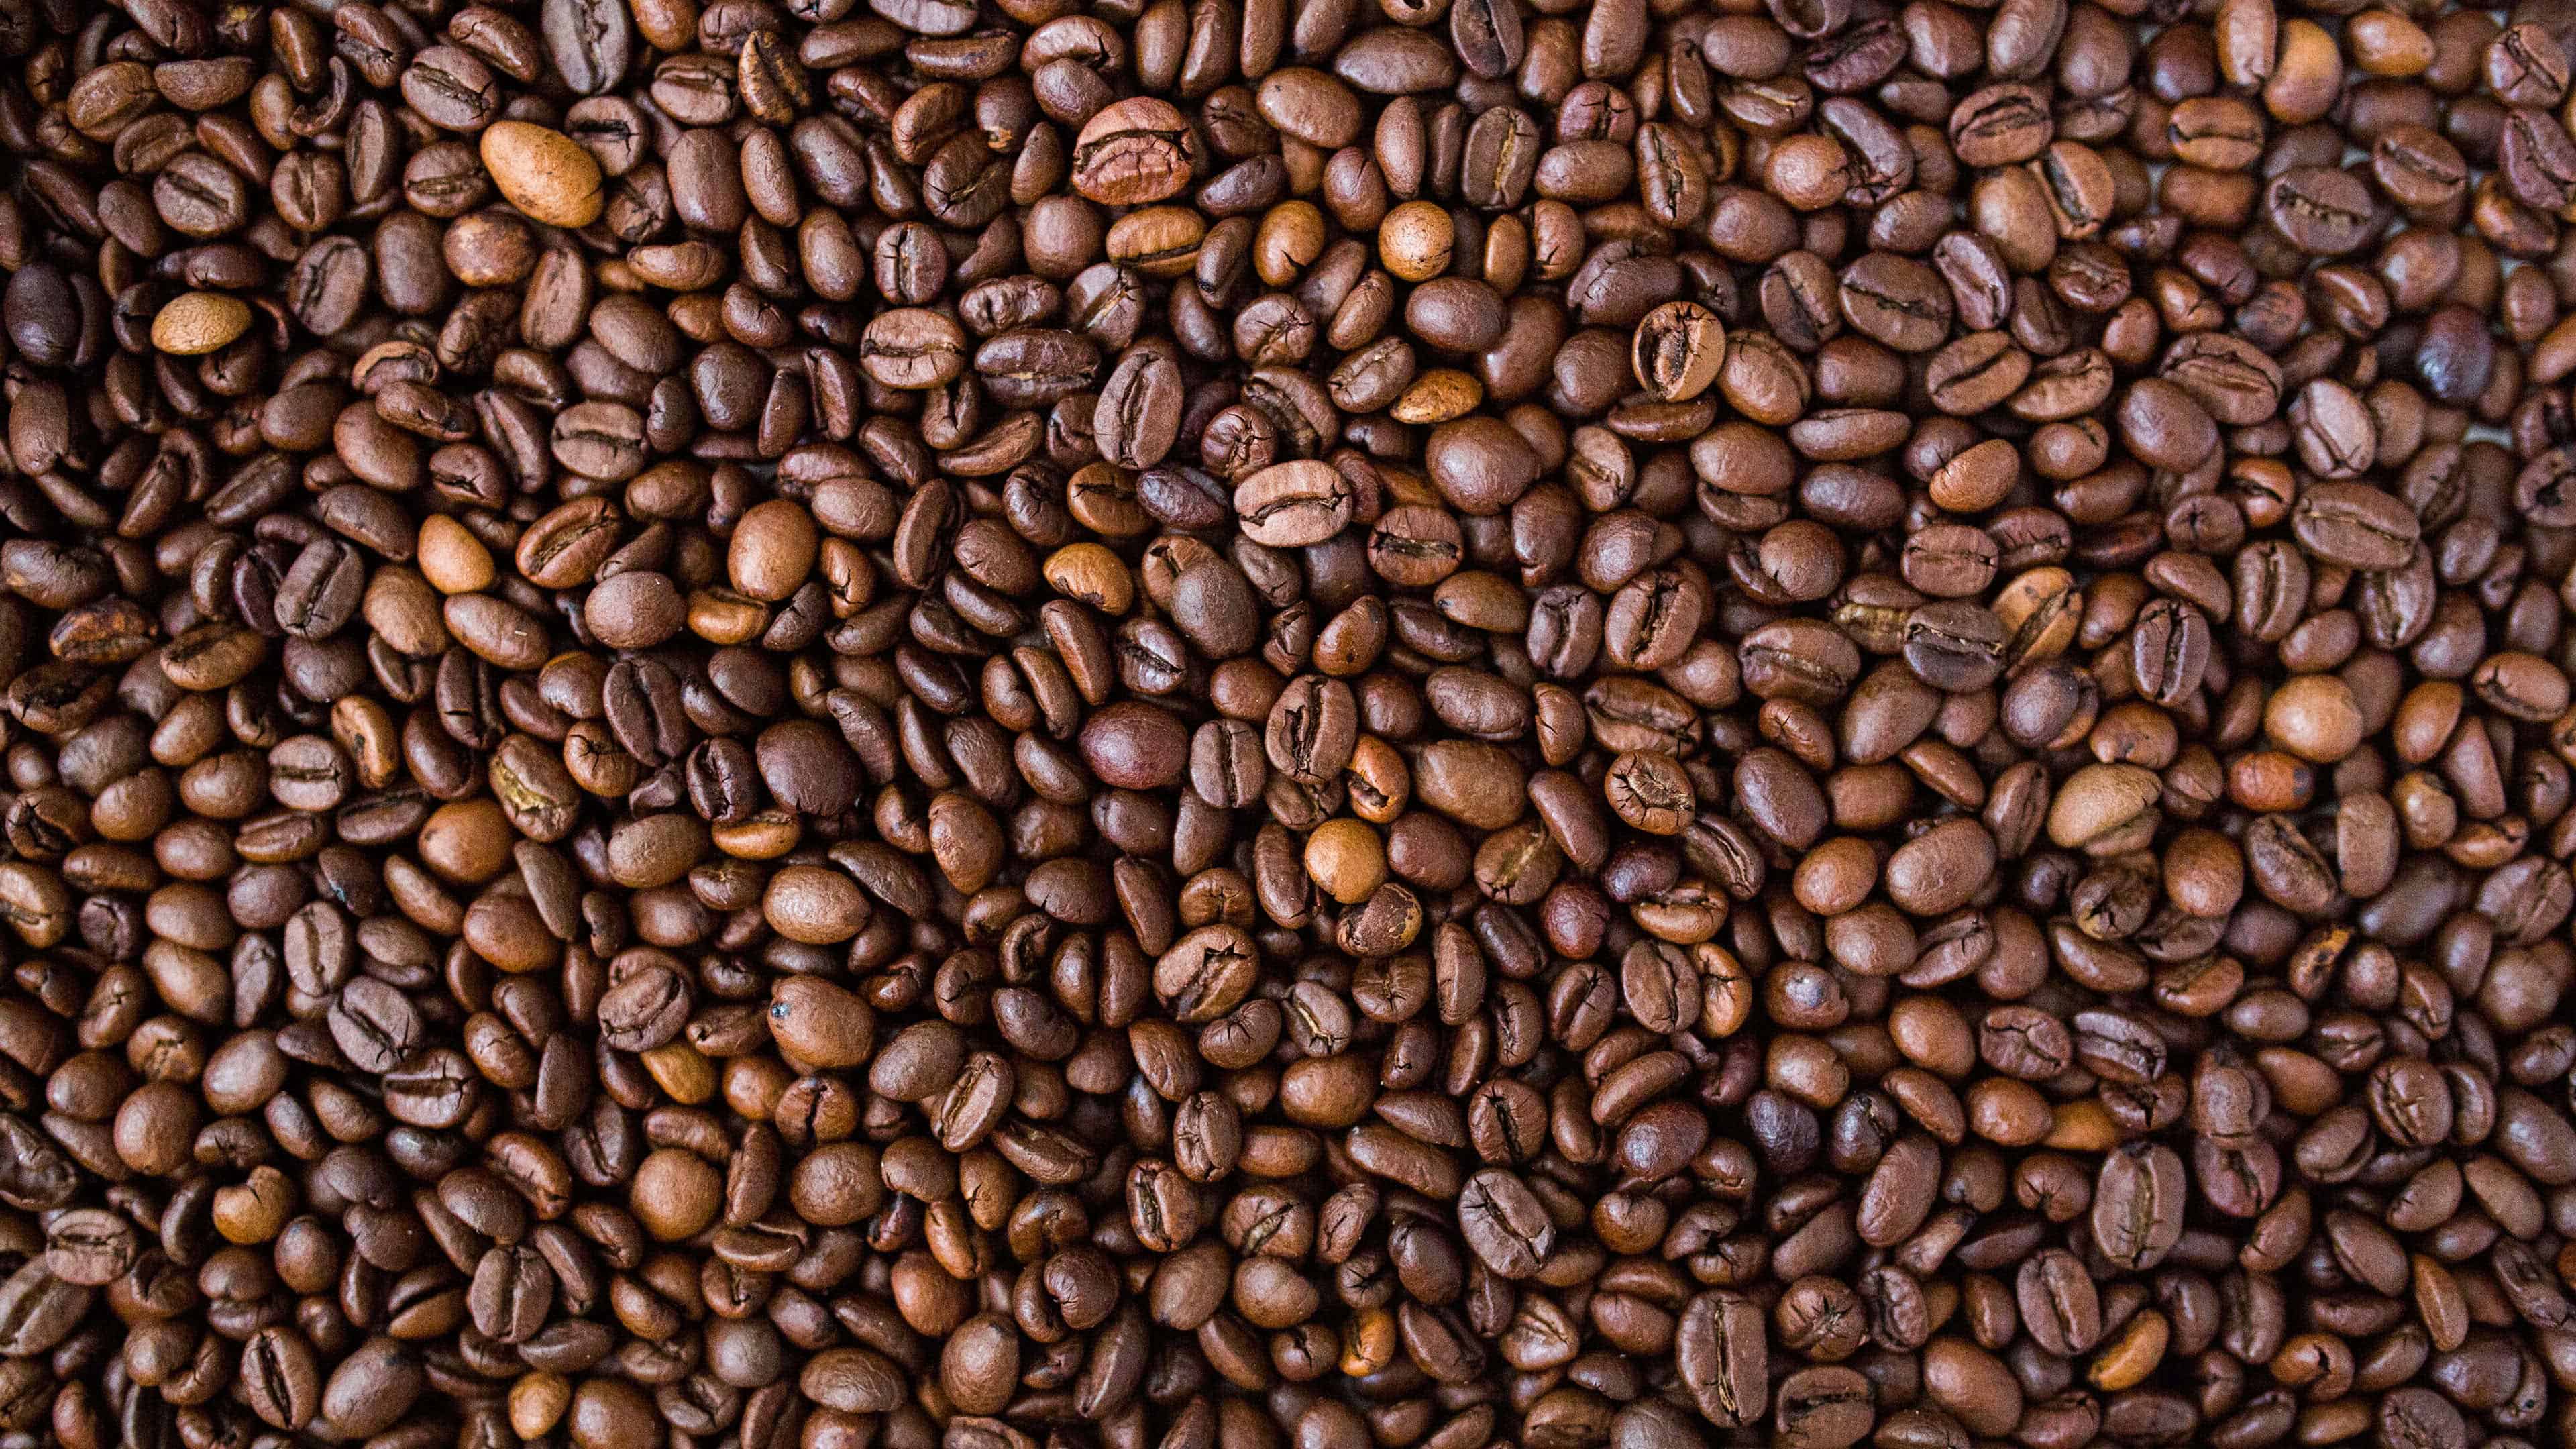 Roasted Coffee Beans UHD 4K Wallpaper | Pixelz